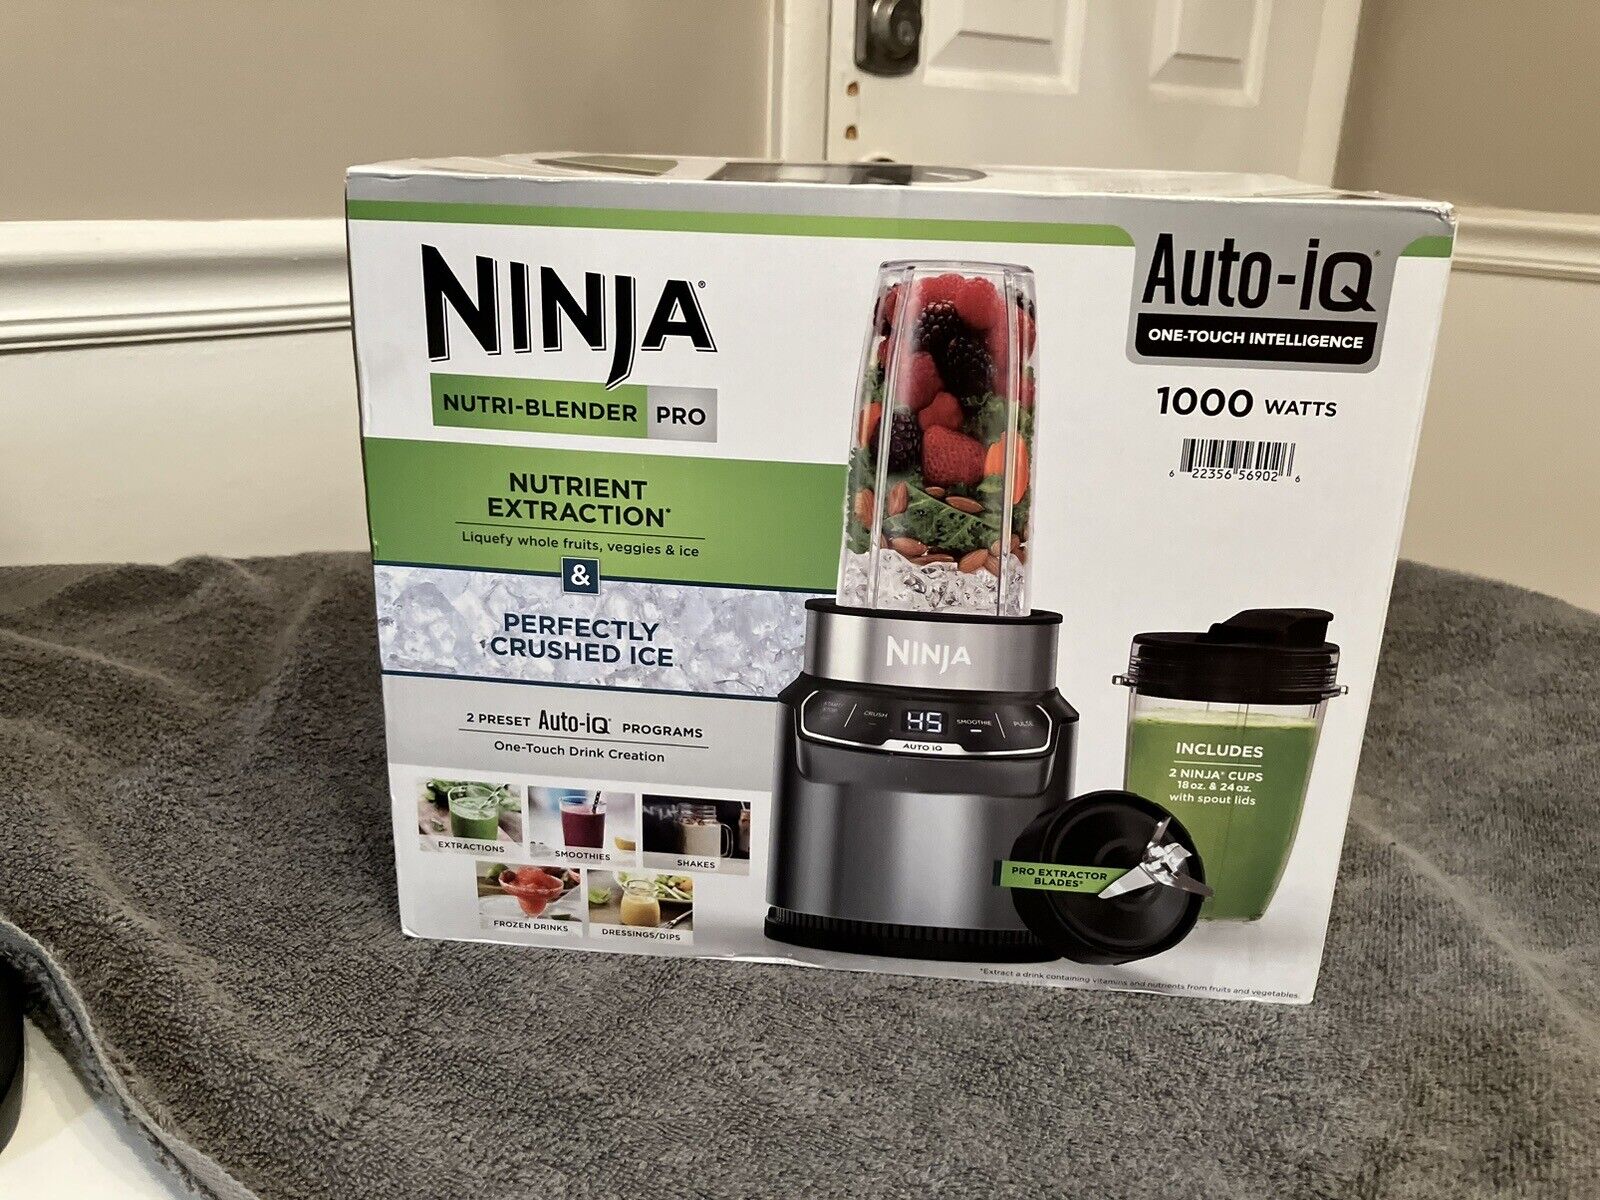 Ninja Nutri-Blender Pro with Auto IQ, 1000 Watts, Personal Blender (BN400C)  